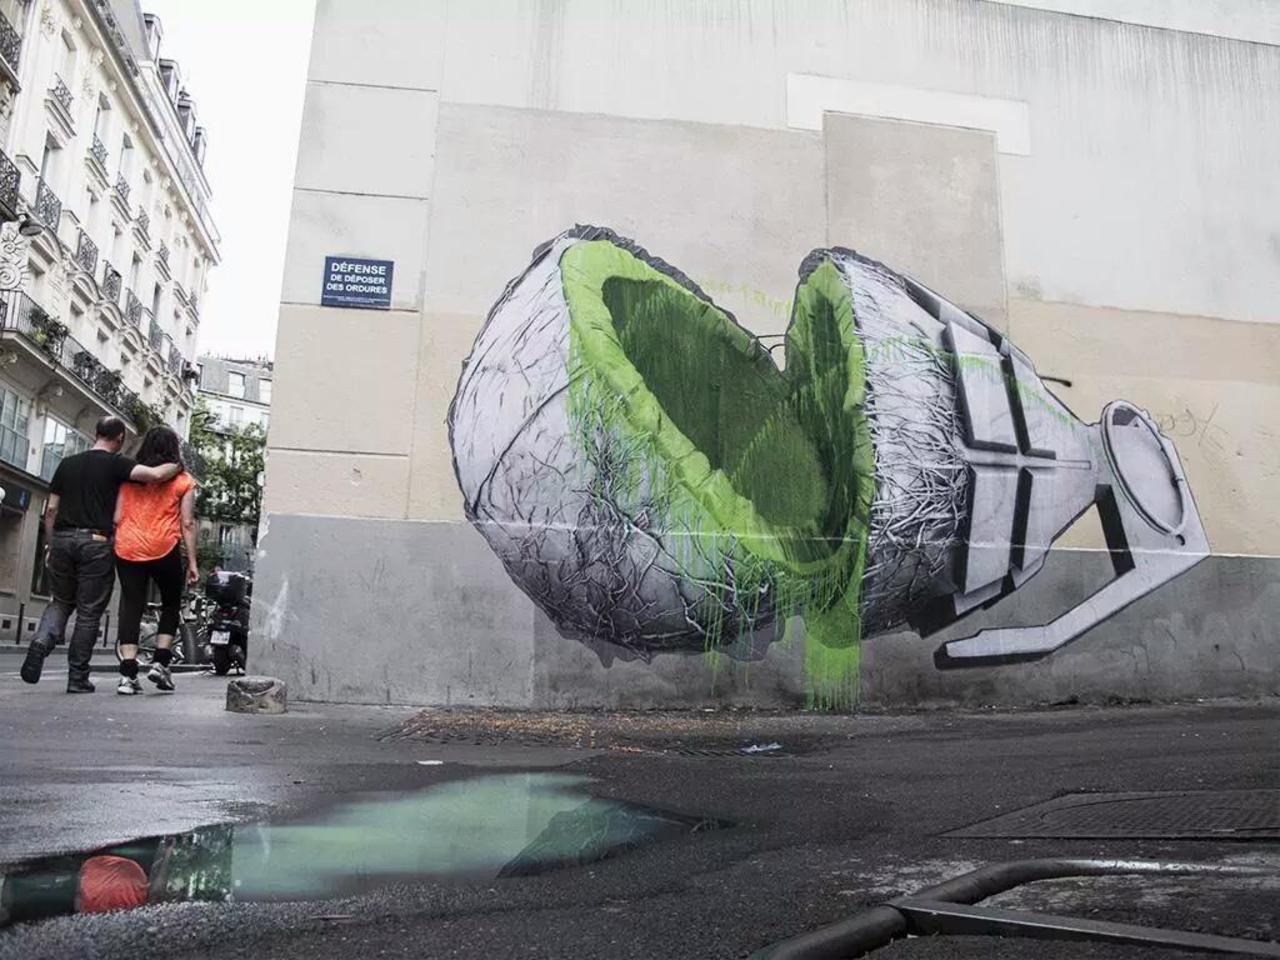 RT @QueGraffiti: "Coco-Grenade", pieza de Ludo en París, Francia #streetart #mural #graffiti #art http://t.co/oXXiZckc13